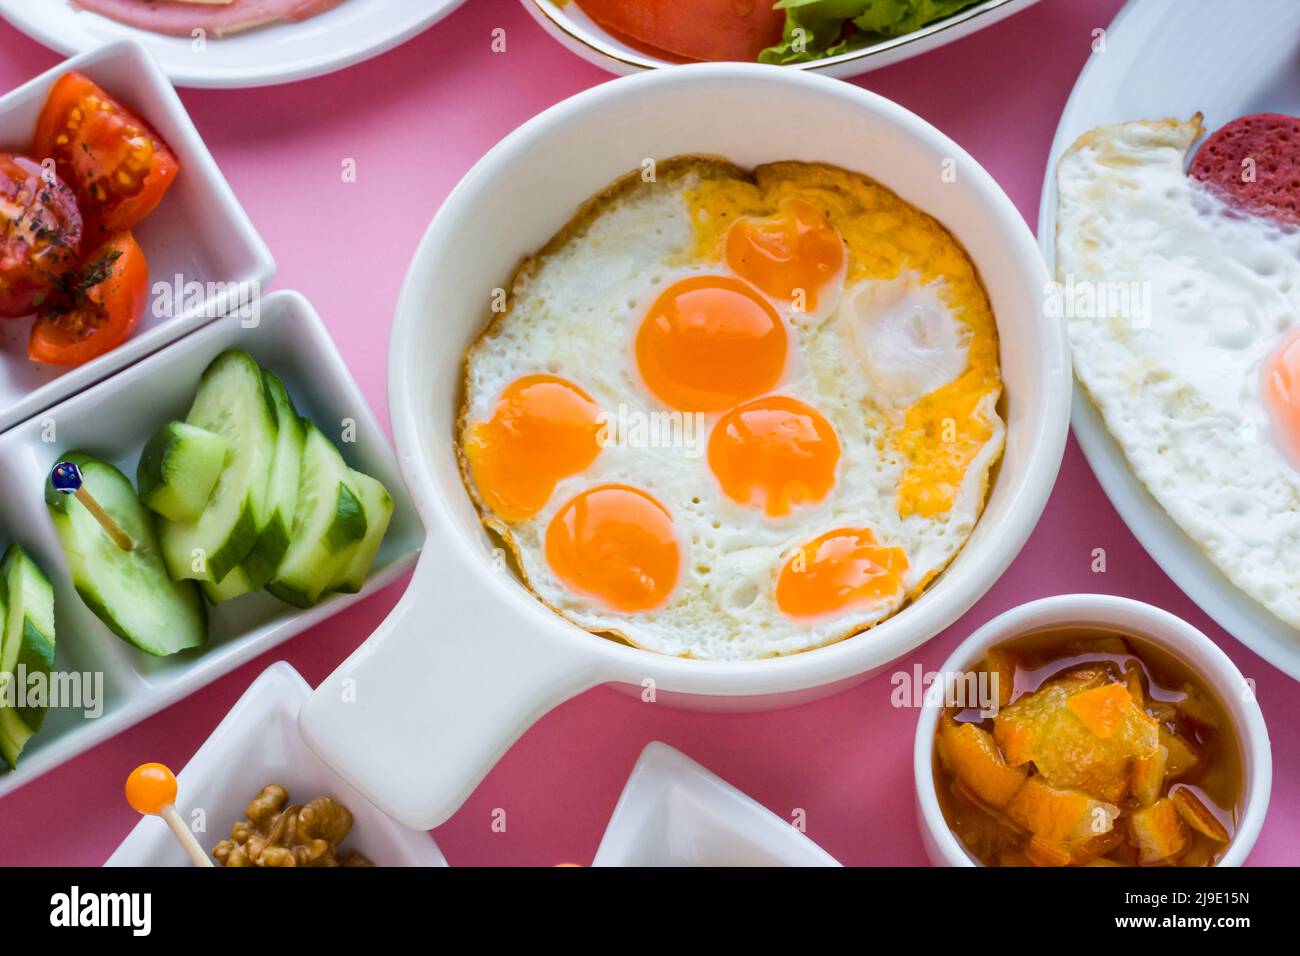 https://c8.alamy.com/comp/2J9E15N/fried-quail-eggs-in-ceramic-egg-panabove-view-2J9E15N.jpg